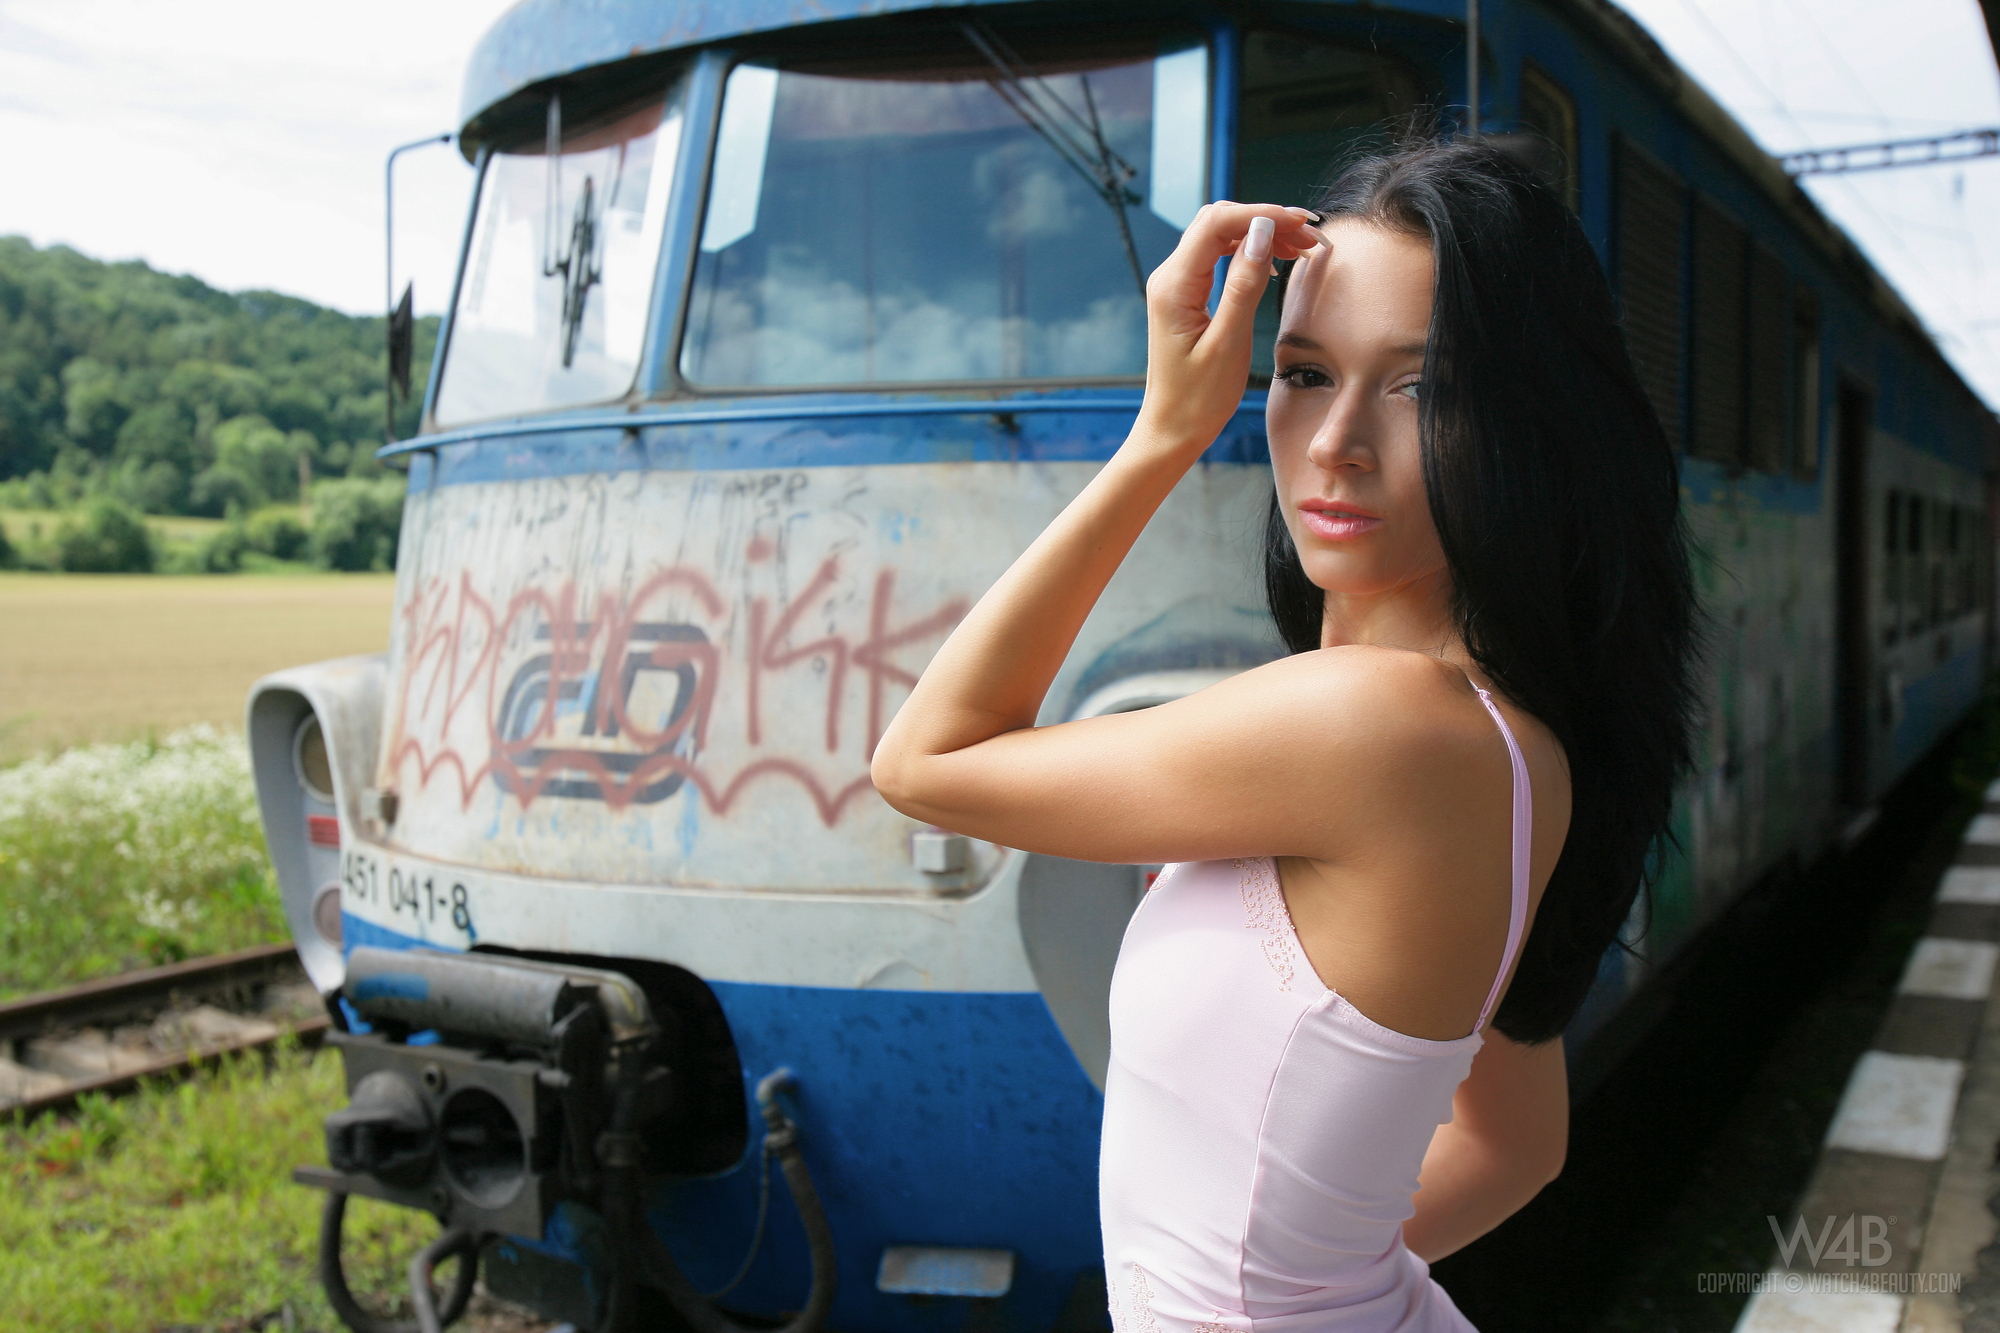 gwen-expired-ticket-nude-public-train-praha-watch4beauty-67